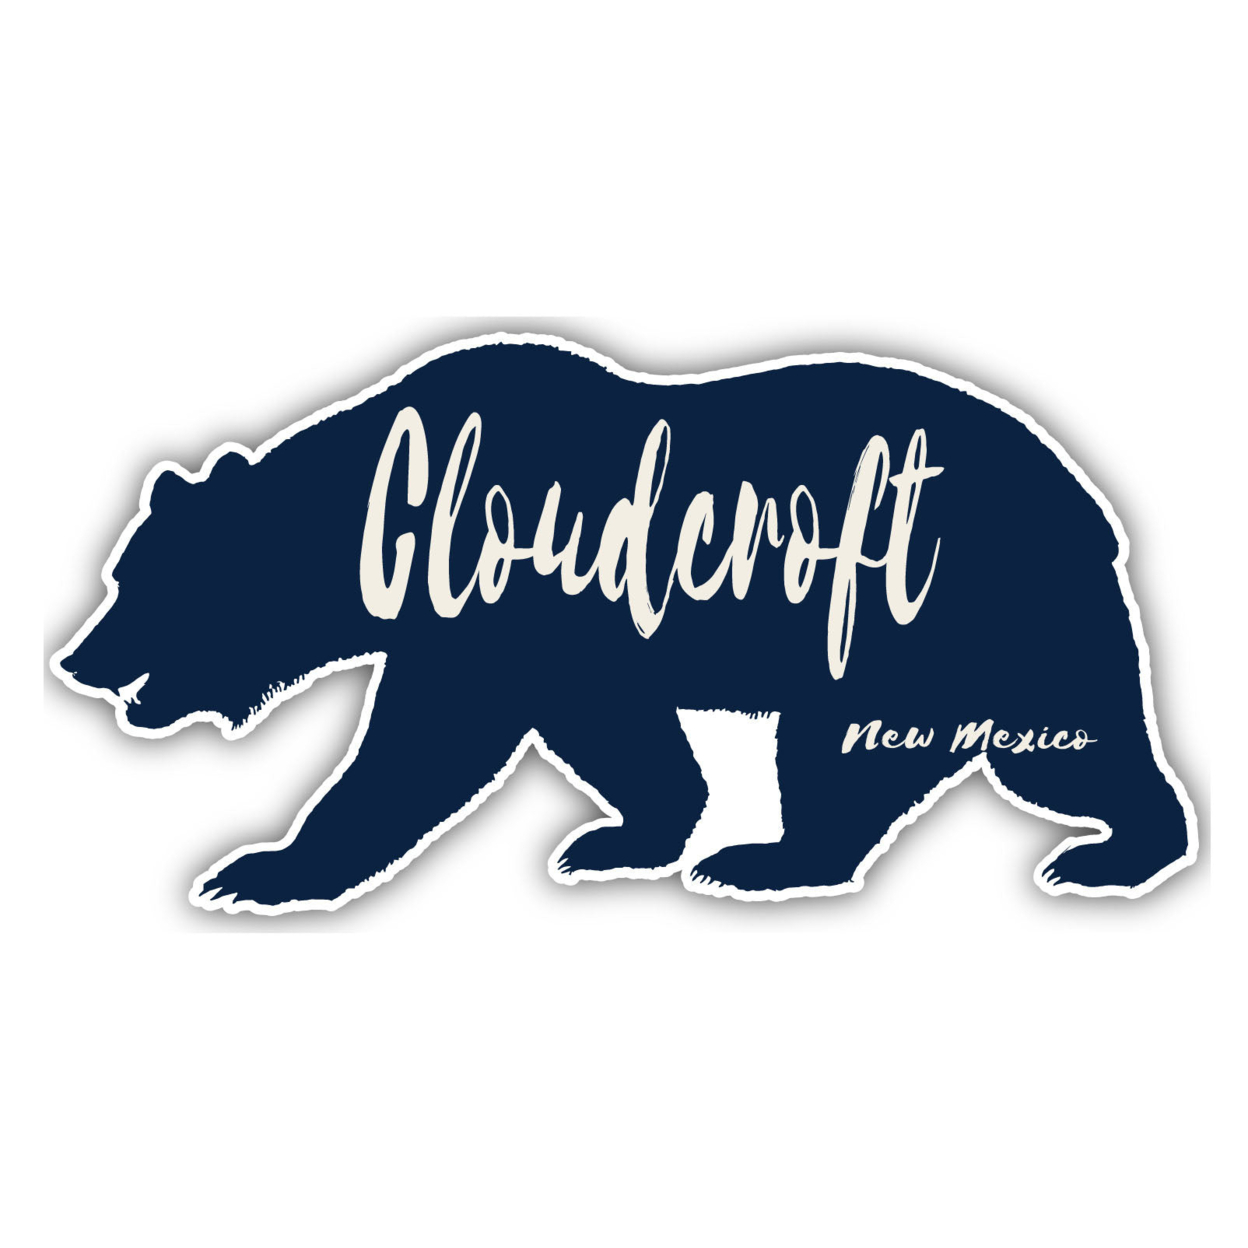 Cloudcroft New Mexico Souvenir Decorative Stickers (Choose Theme And Size) - Single Unit, 10-Inch, Adventures Awaits